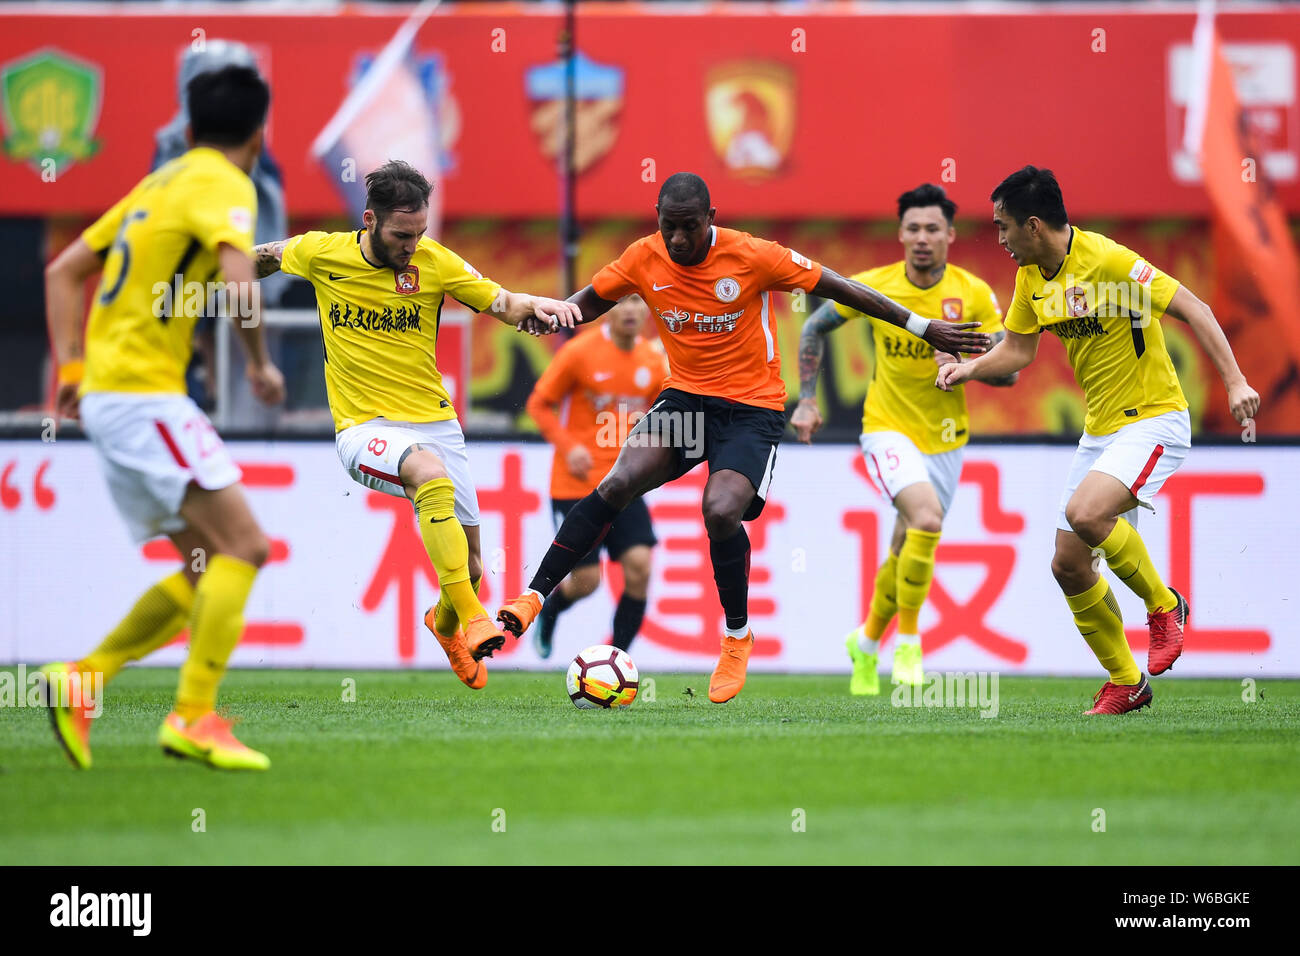 Ecuadorian football player Jaime Ayovi, center, of Beijing Renhe kicks the ball to make a pass against players of Guangzhou Evergrande Taobao in their Stock Photo